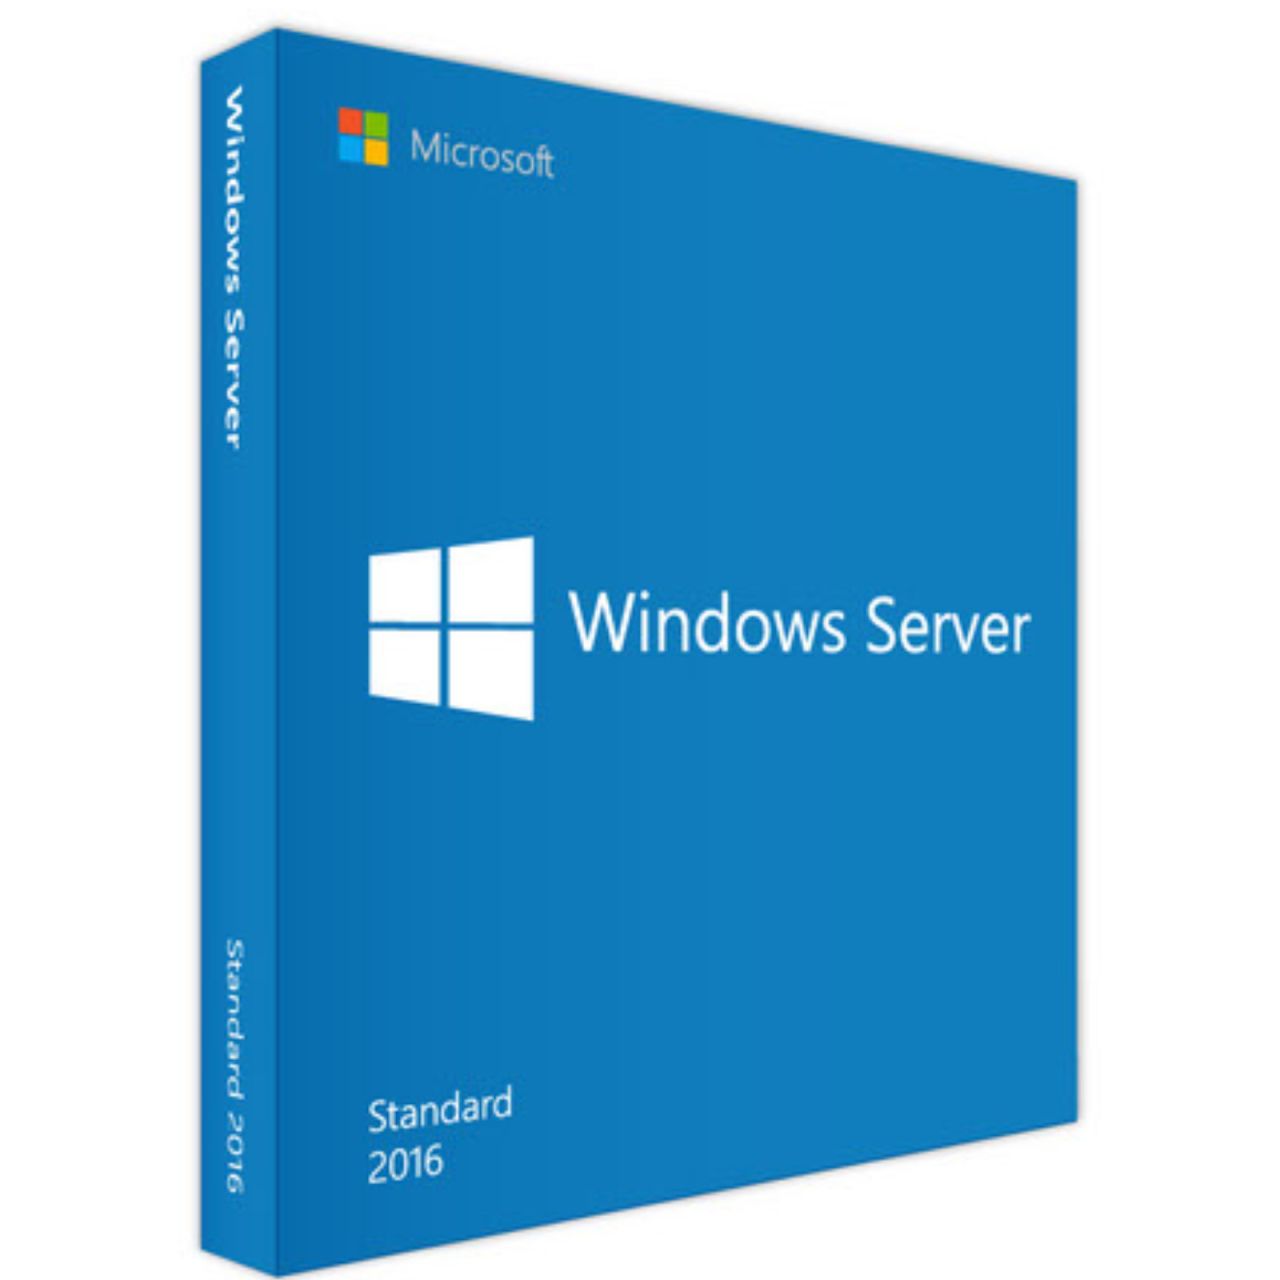 Windows Server 2016 | DigitaLicence